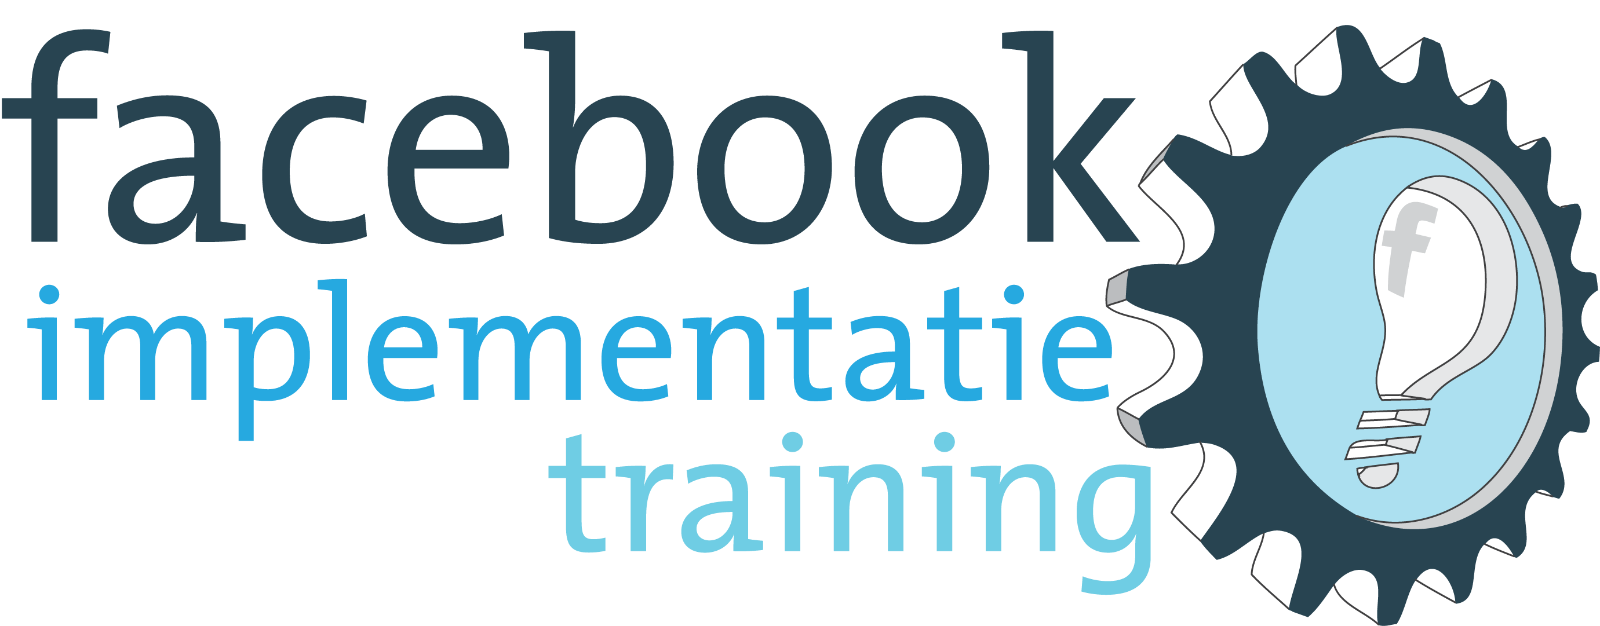 Facebook Implementatietraining 7 december 2016